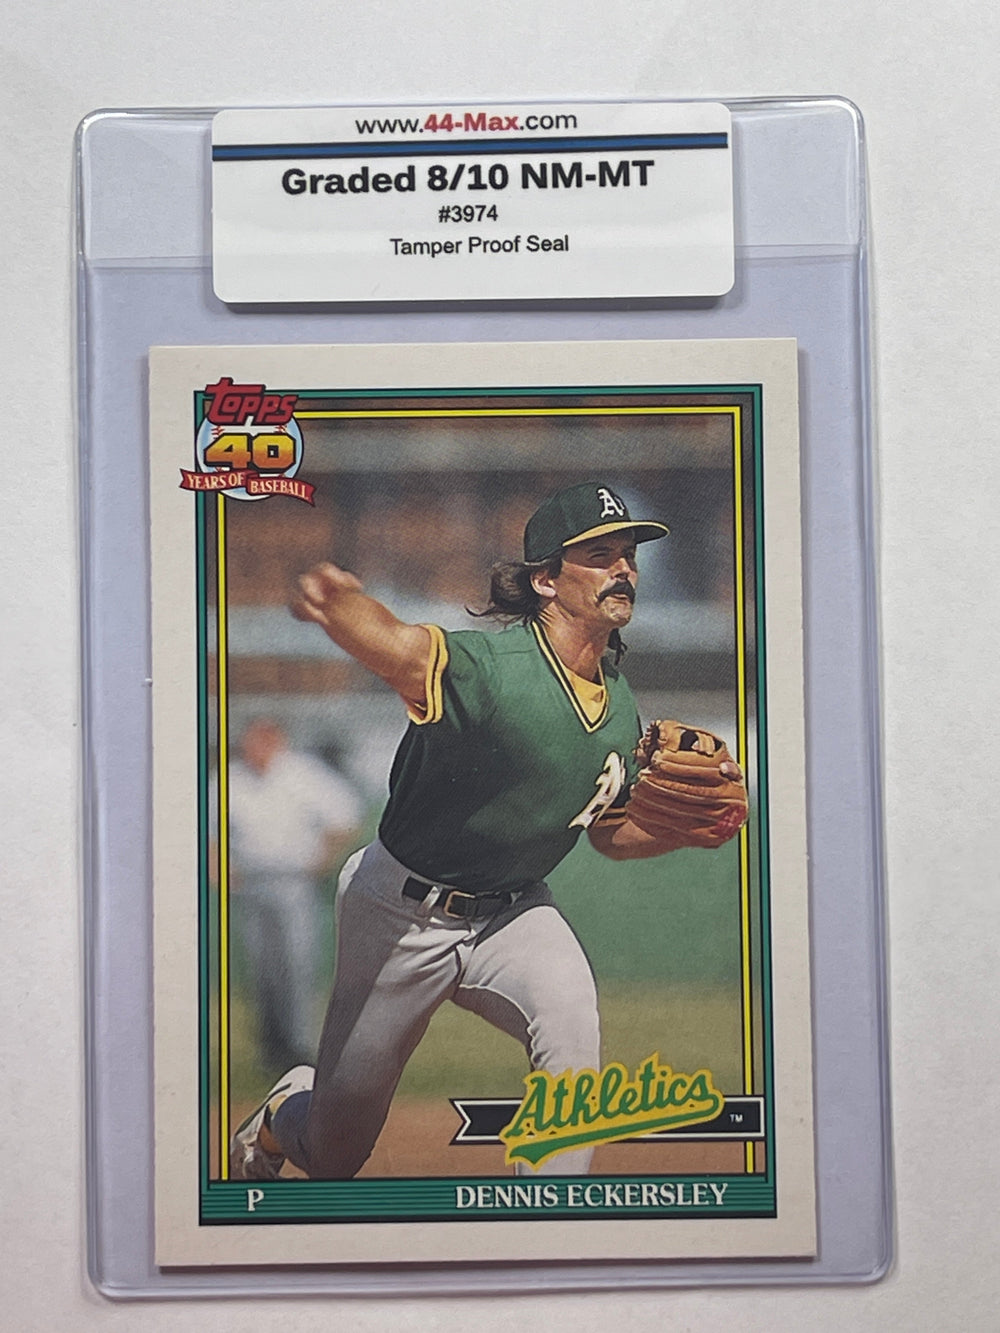 Dennis Eckersley 1991 O-Pee-Chee Baseball Card. 44-Max 8/10 NM-MT #3974